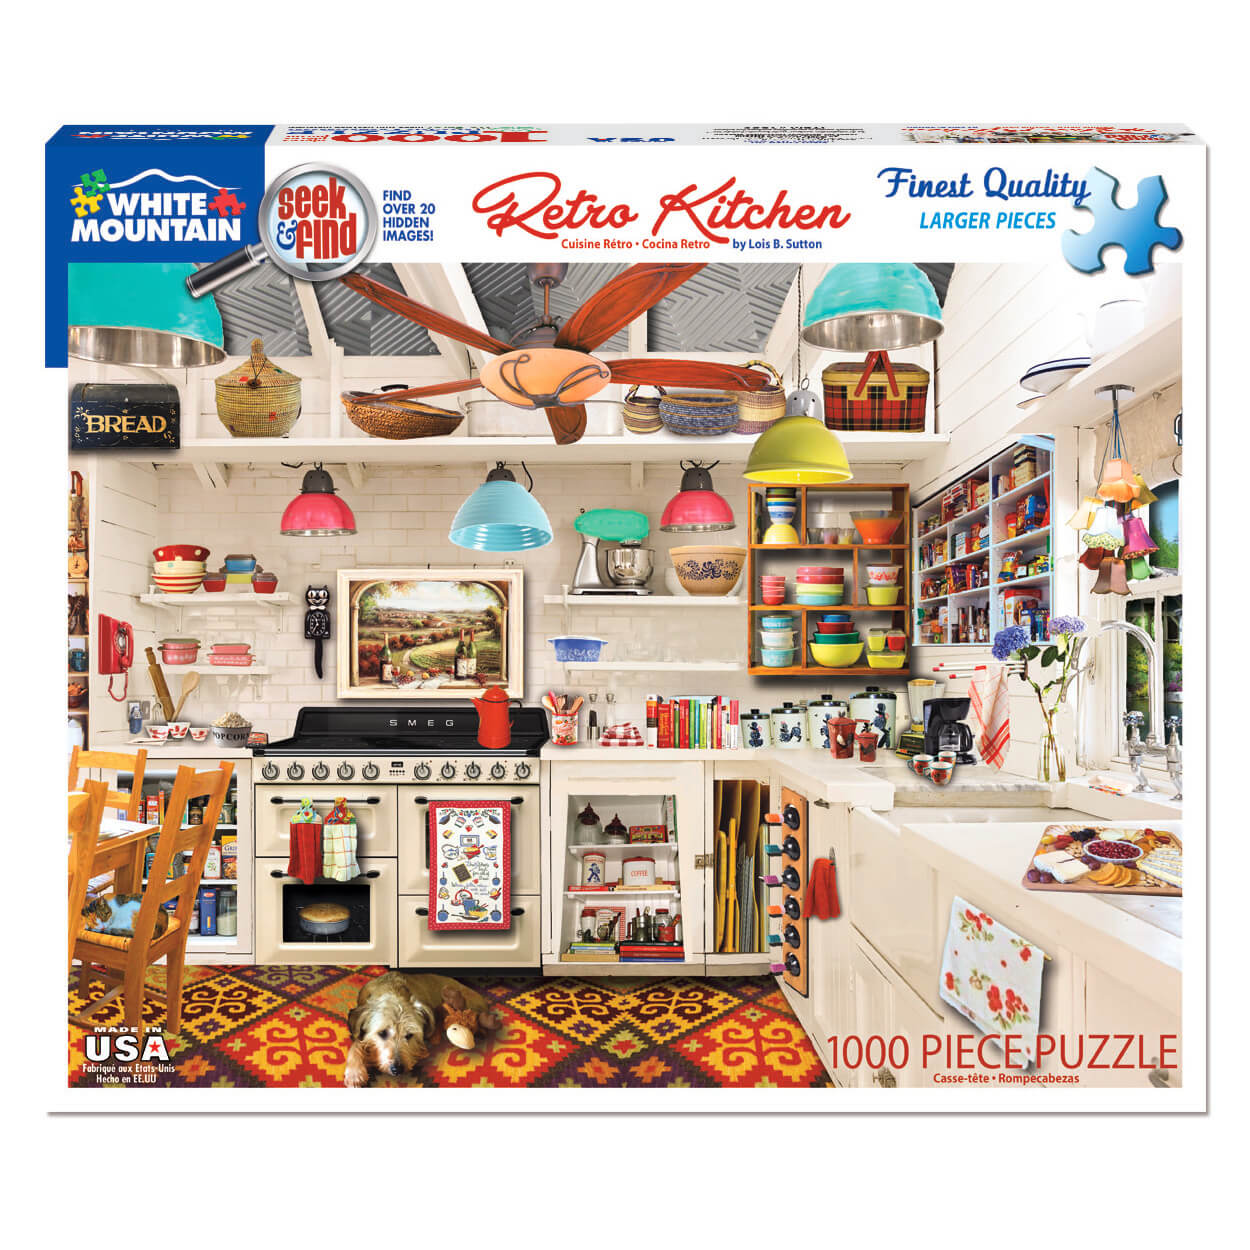 White Mountain Puzzles Retro Kitchen Seek & Find 1000 Piece Jigsaw Puzzle